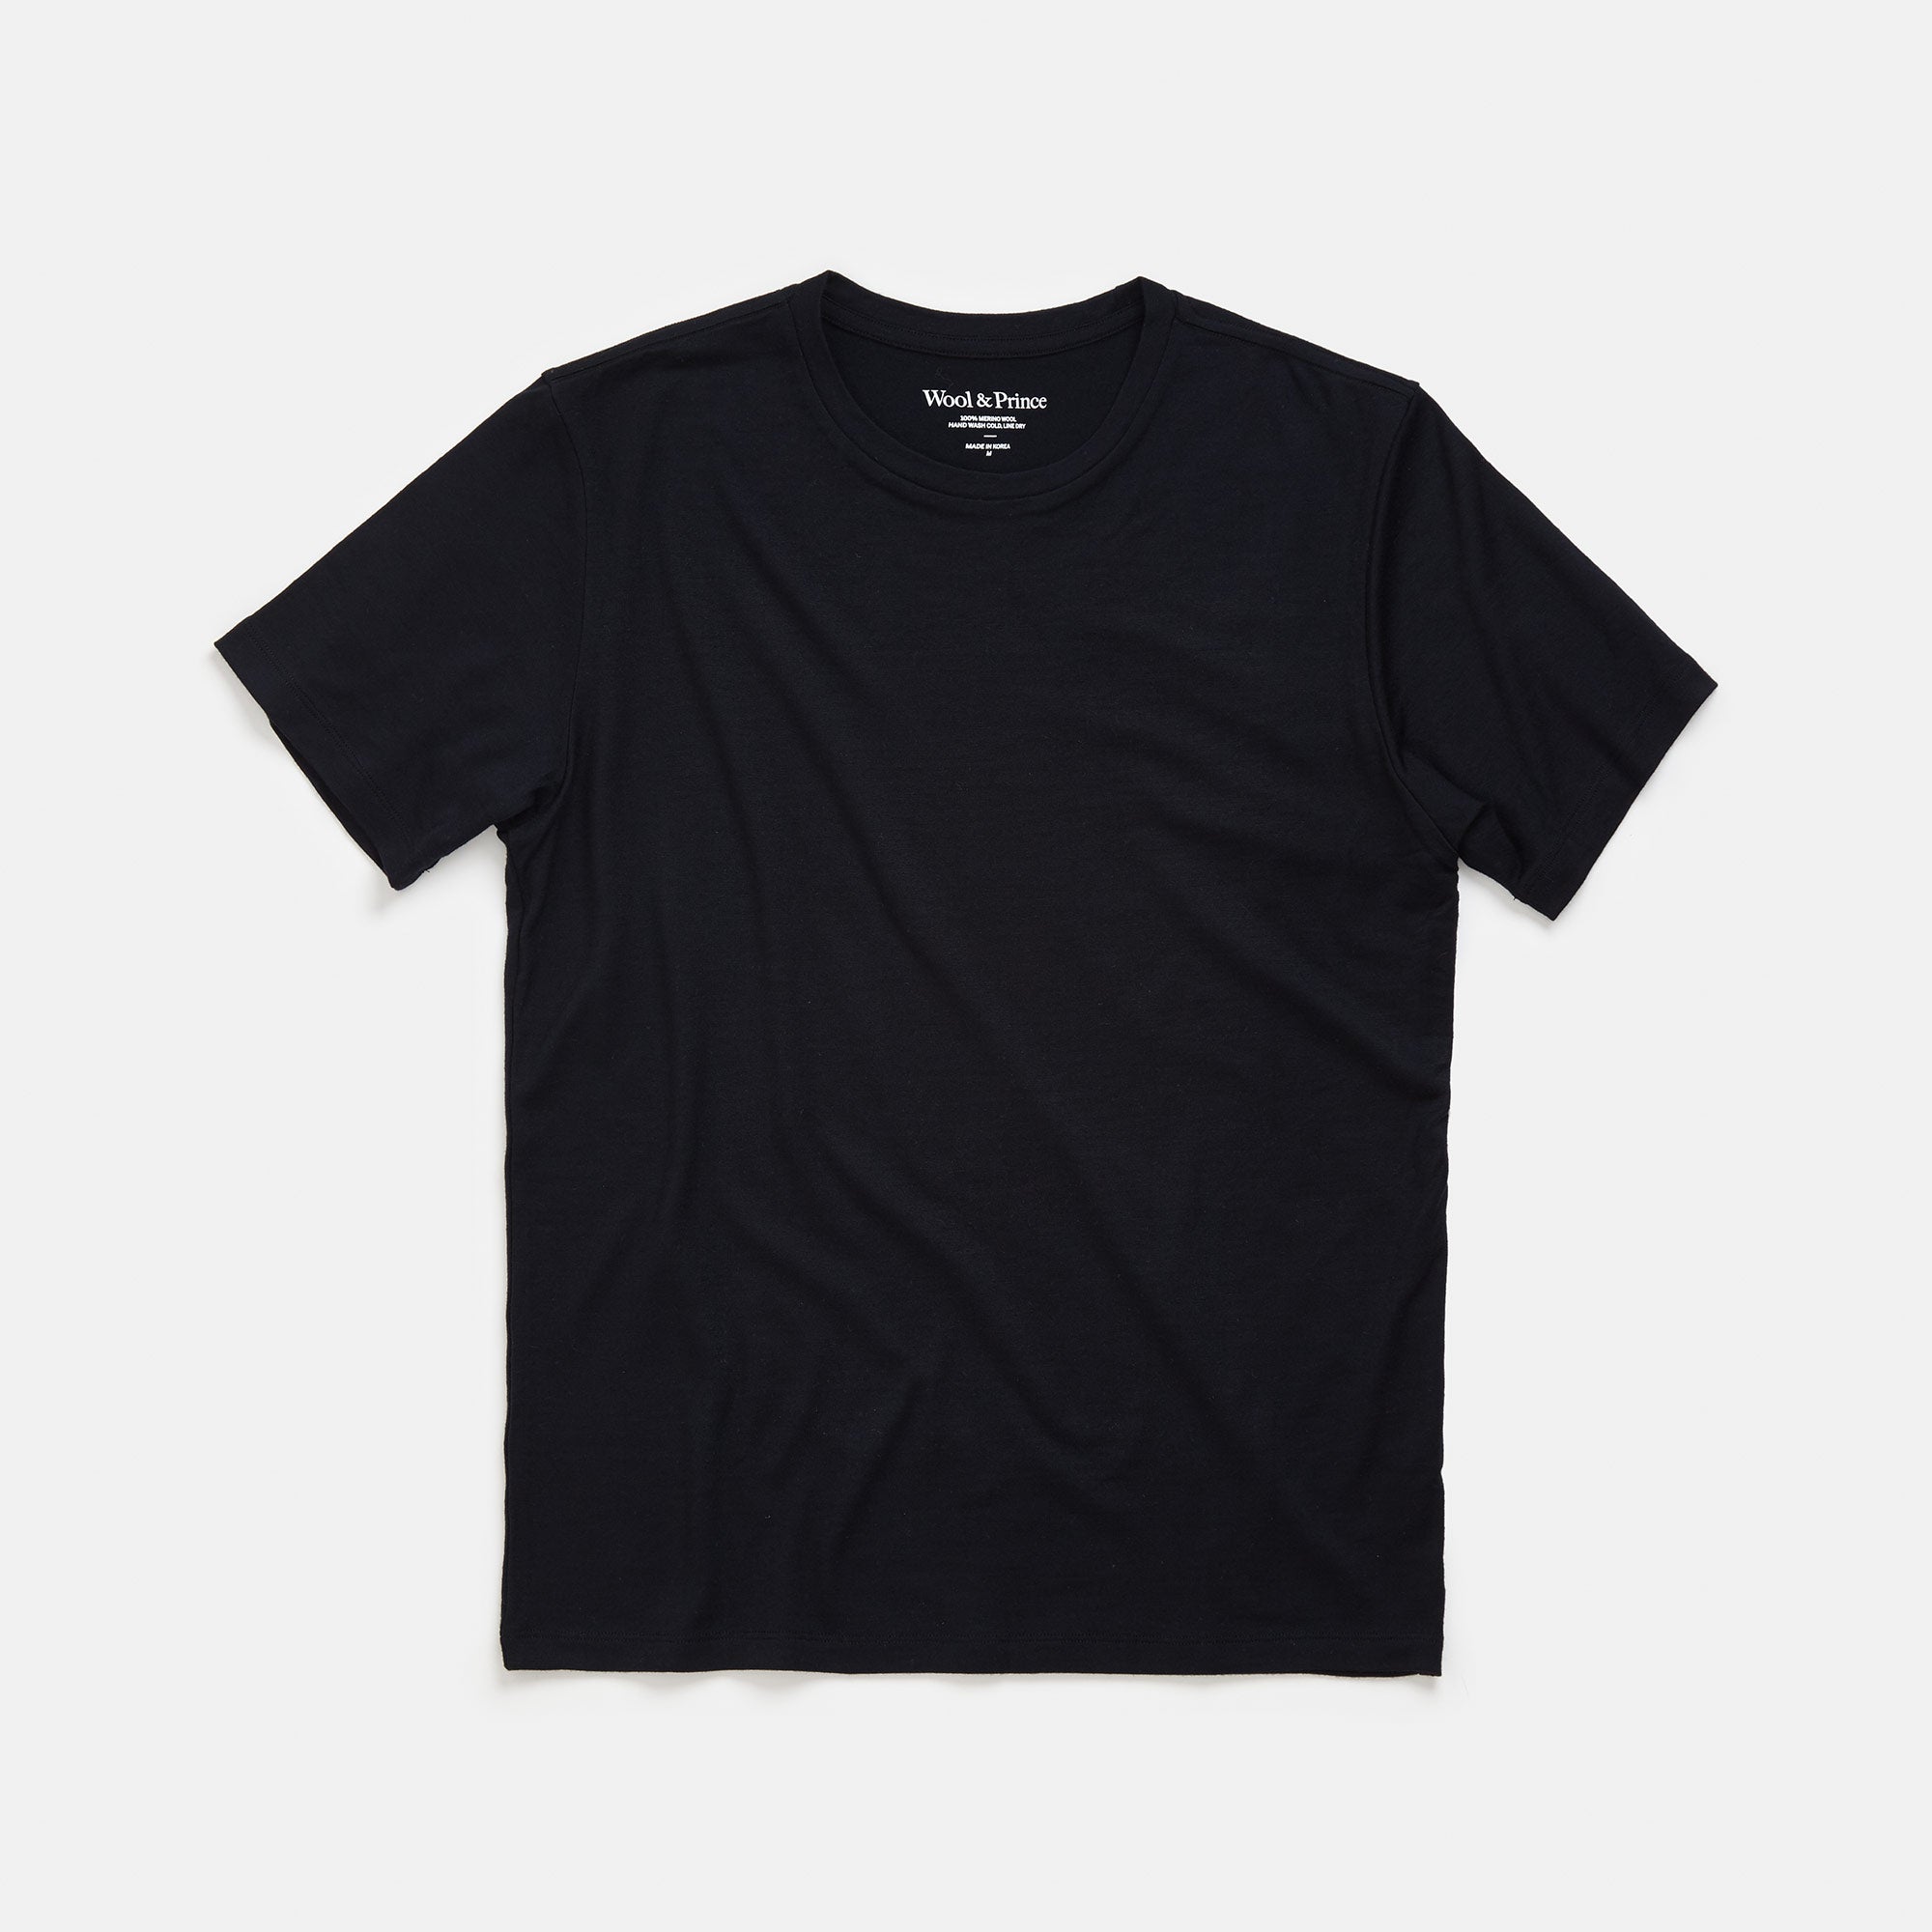 100% Merino Wool Crew Neck T-Shirt | Black | Wool&Prince